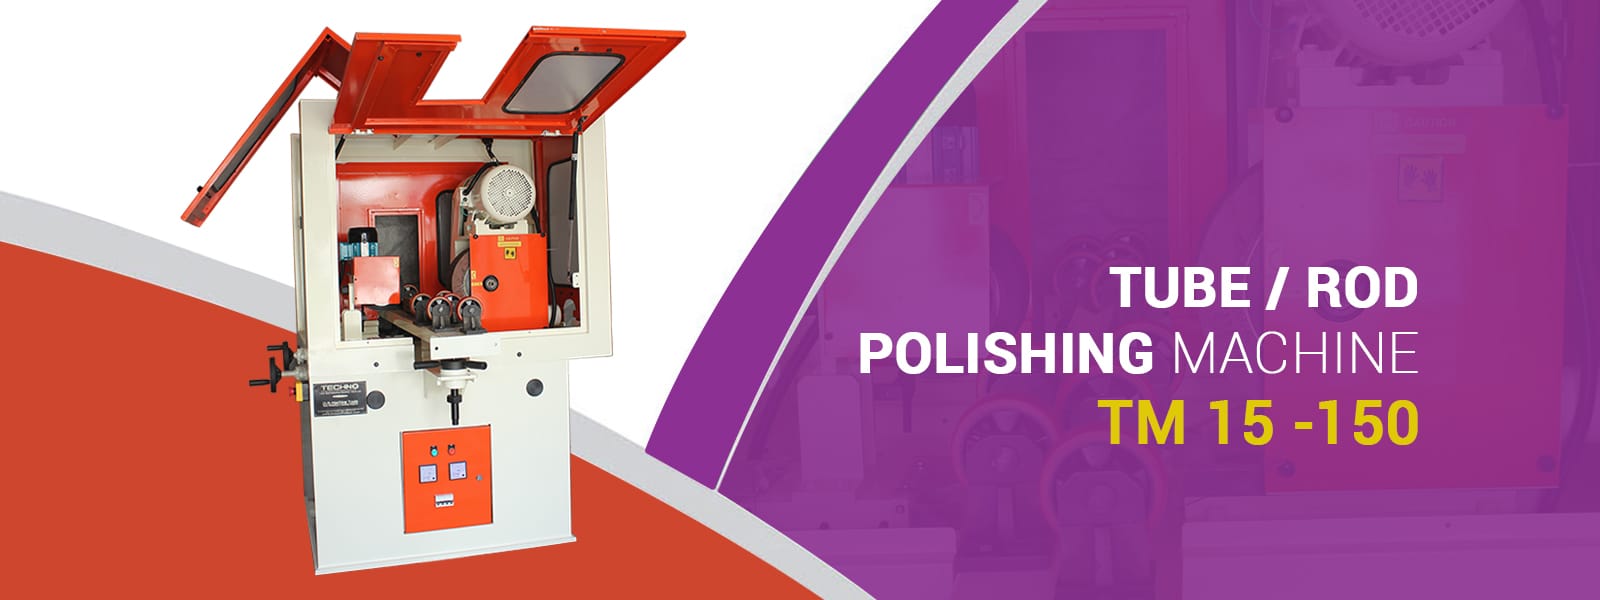 tube/rod polishing machine tm 15-150